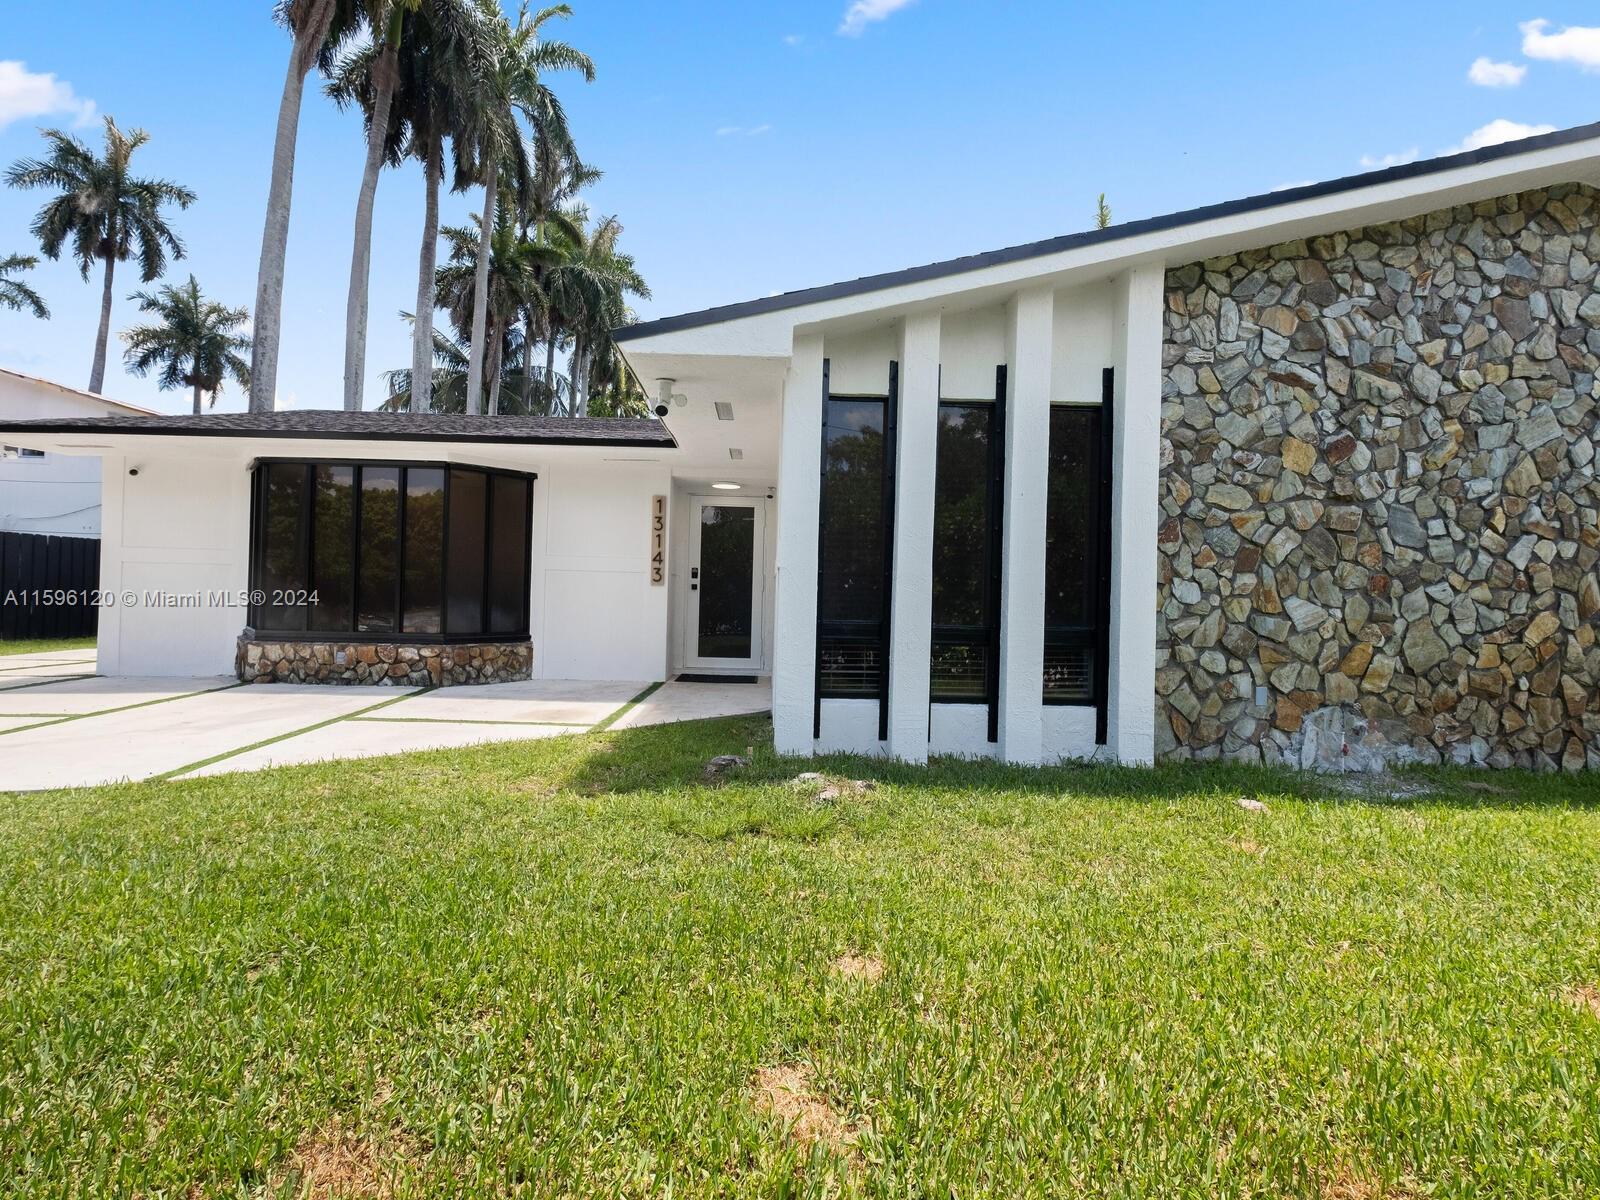 Rental Property at 13141 Ne 3rd Ave, North Miami, Miami-Dade County, Florida -  - $1,195,000 MO.